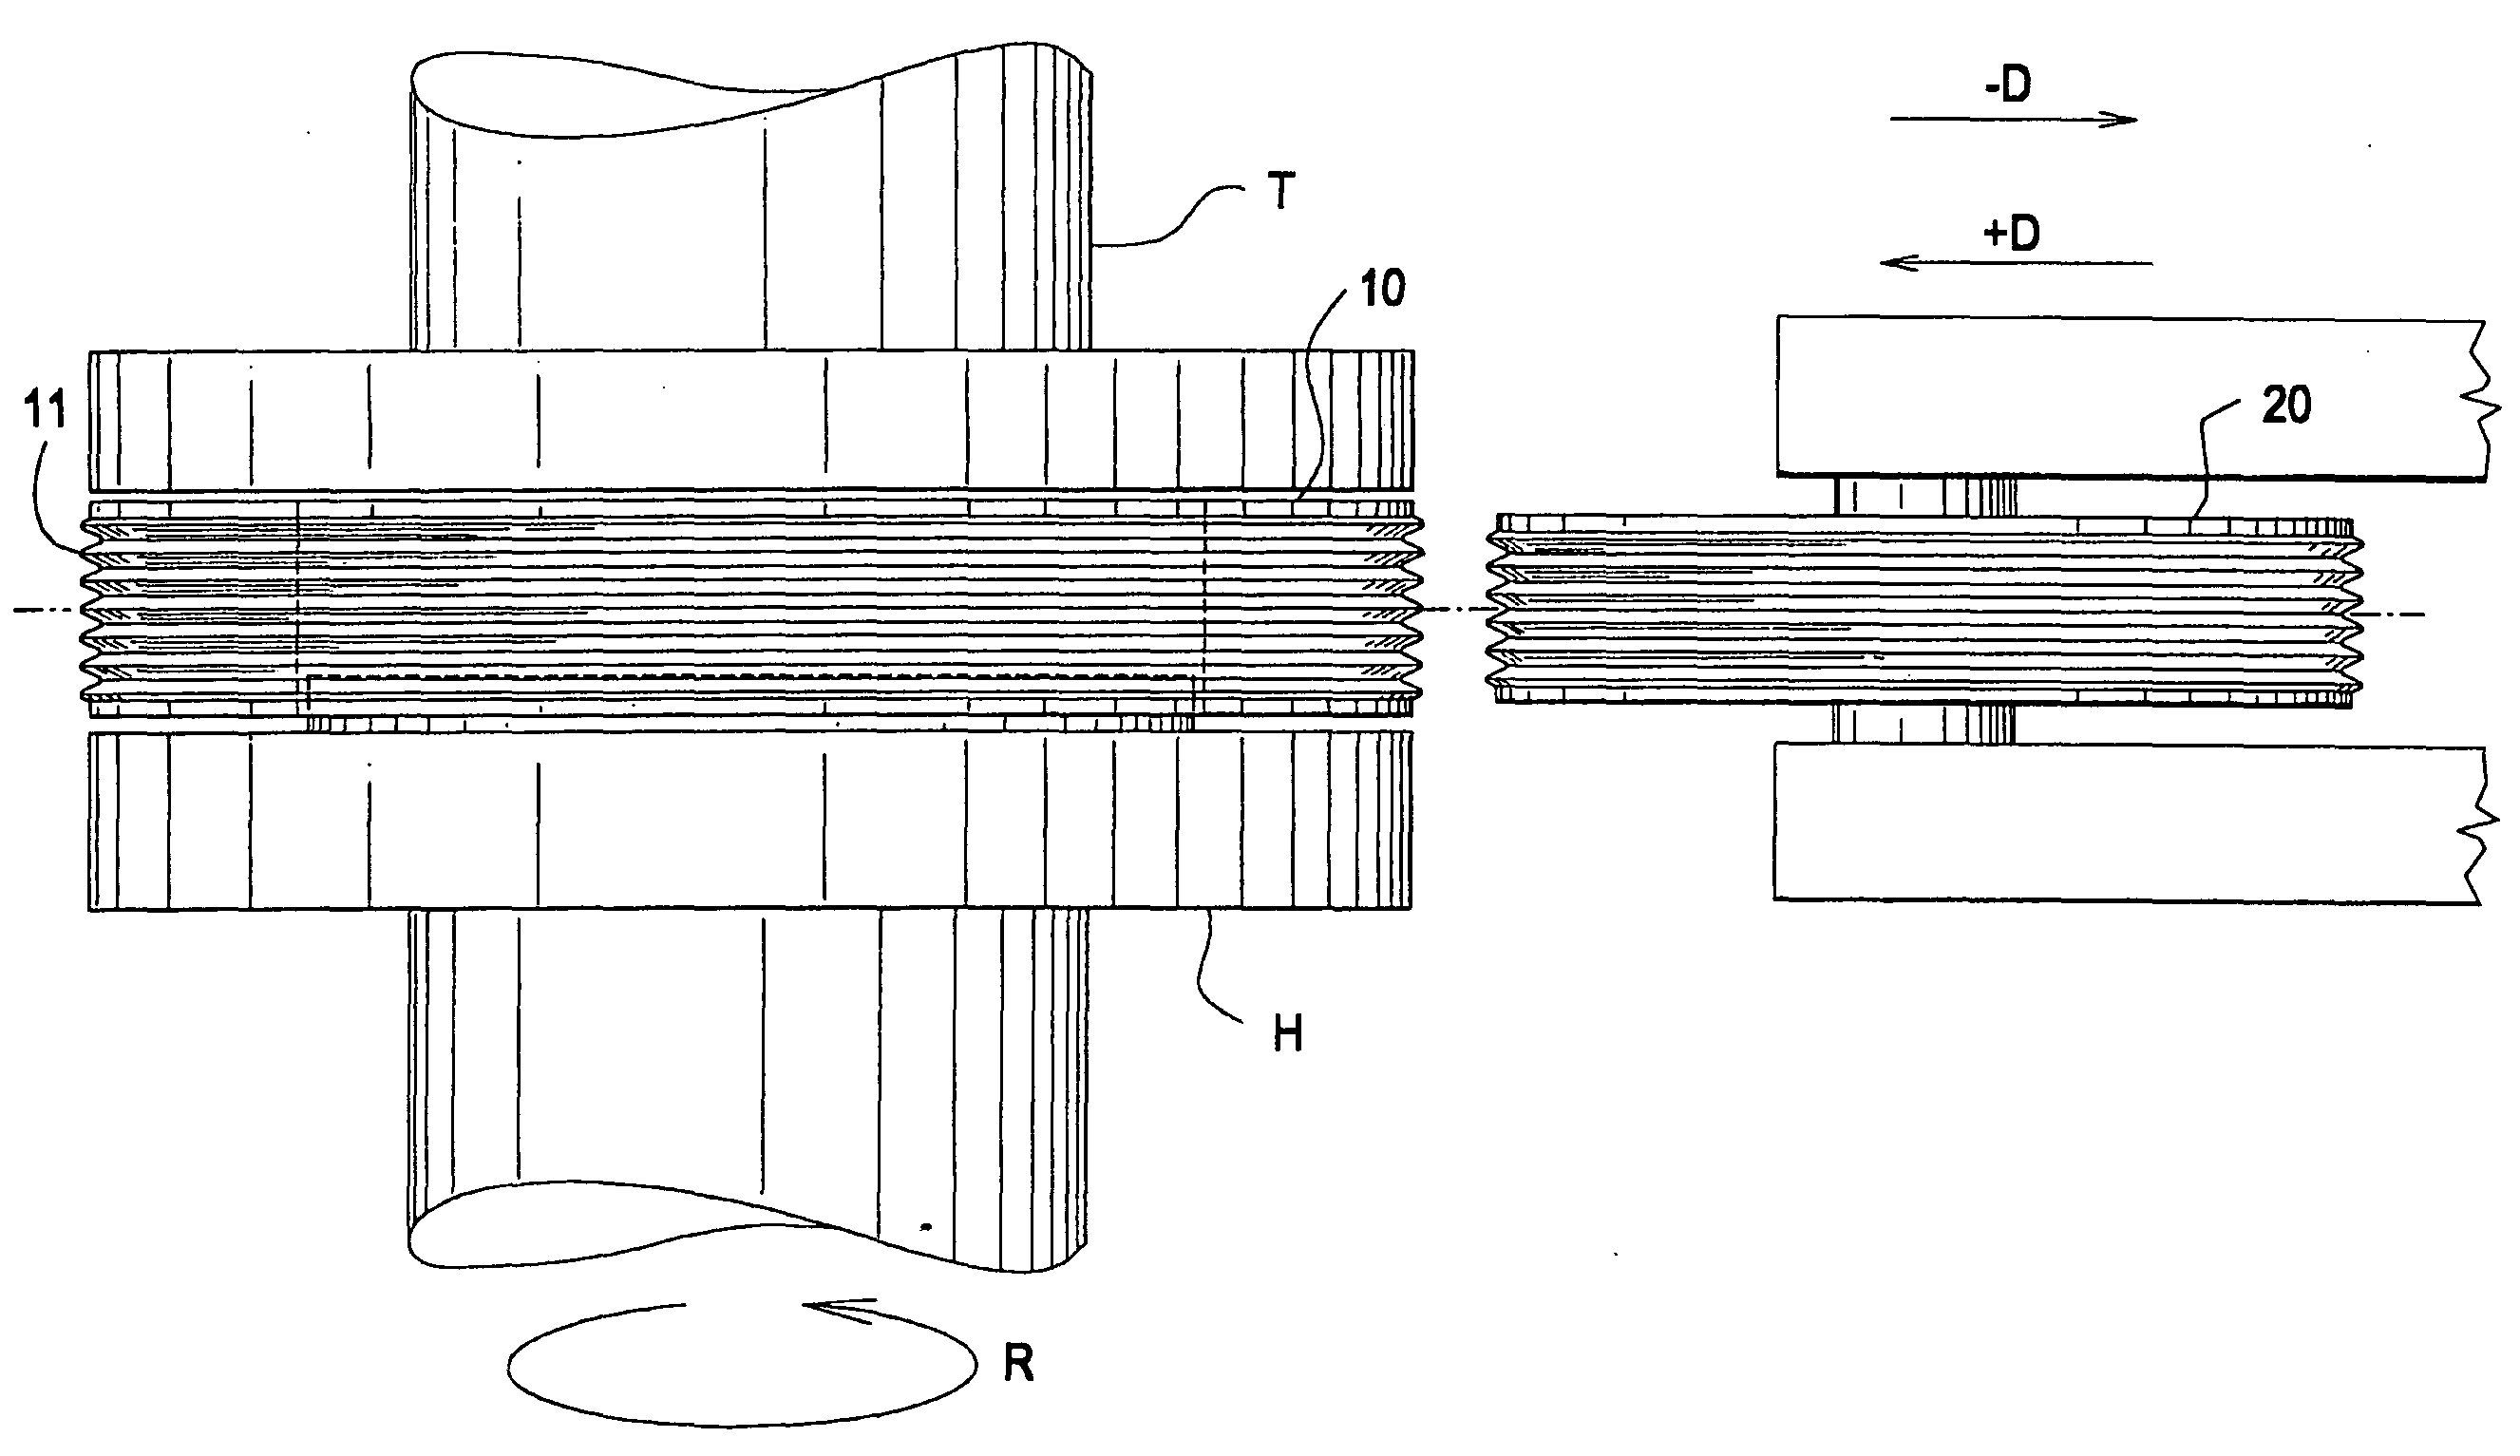 Method of flow forming a metal part